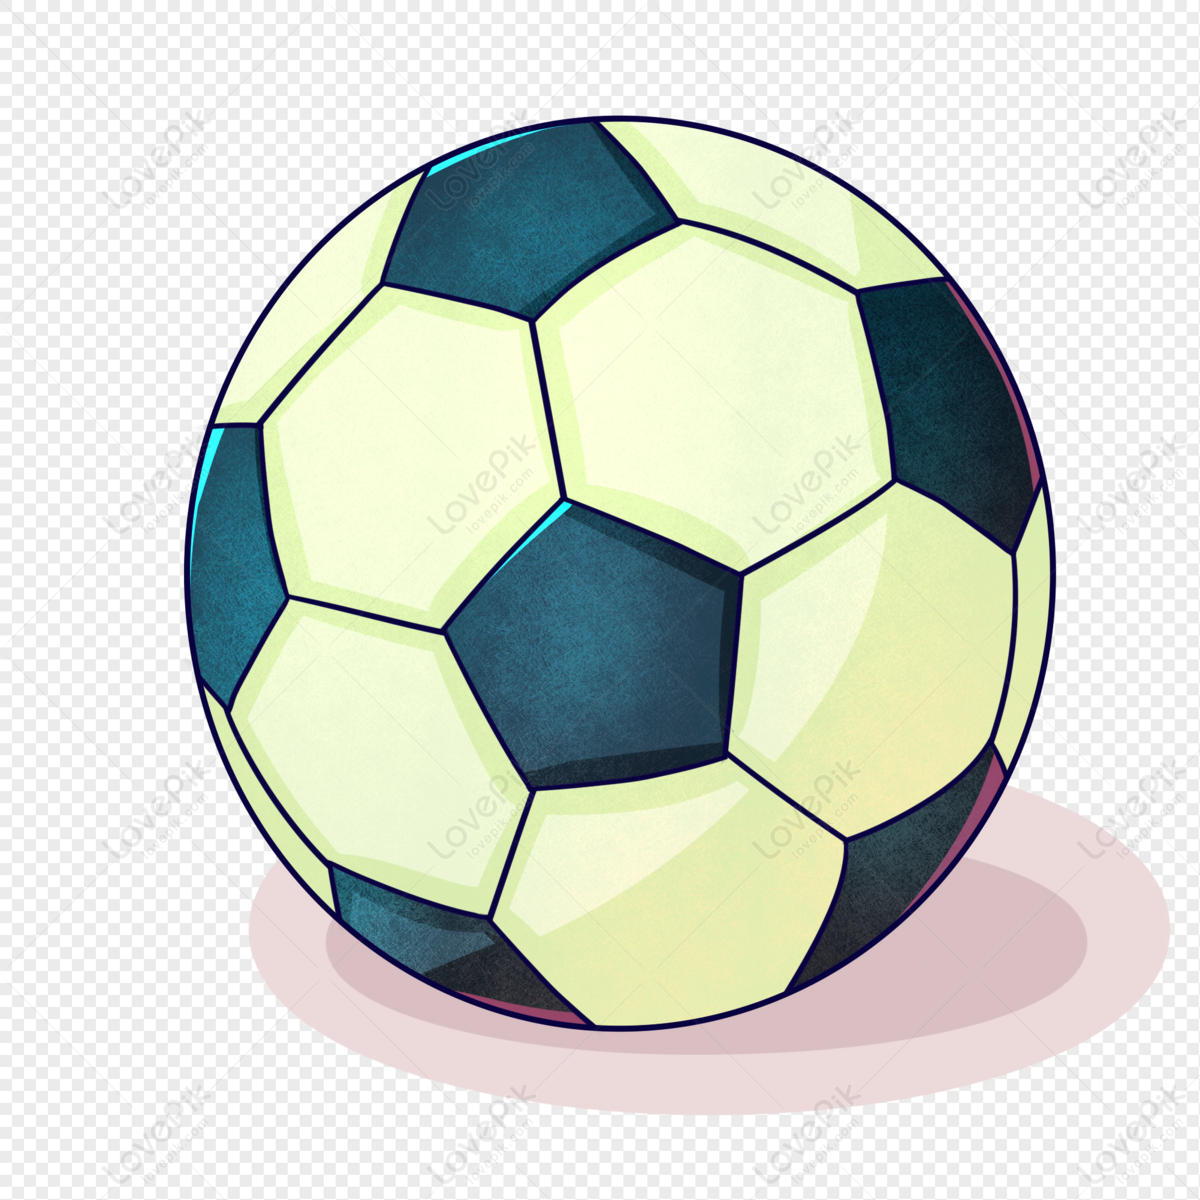 Football Cartoon png download - 980*980 - Free Transparent Ball png Download.  - CleanPNG / KissPNG